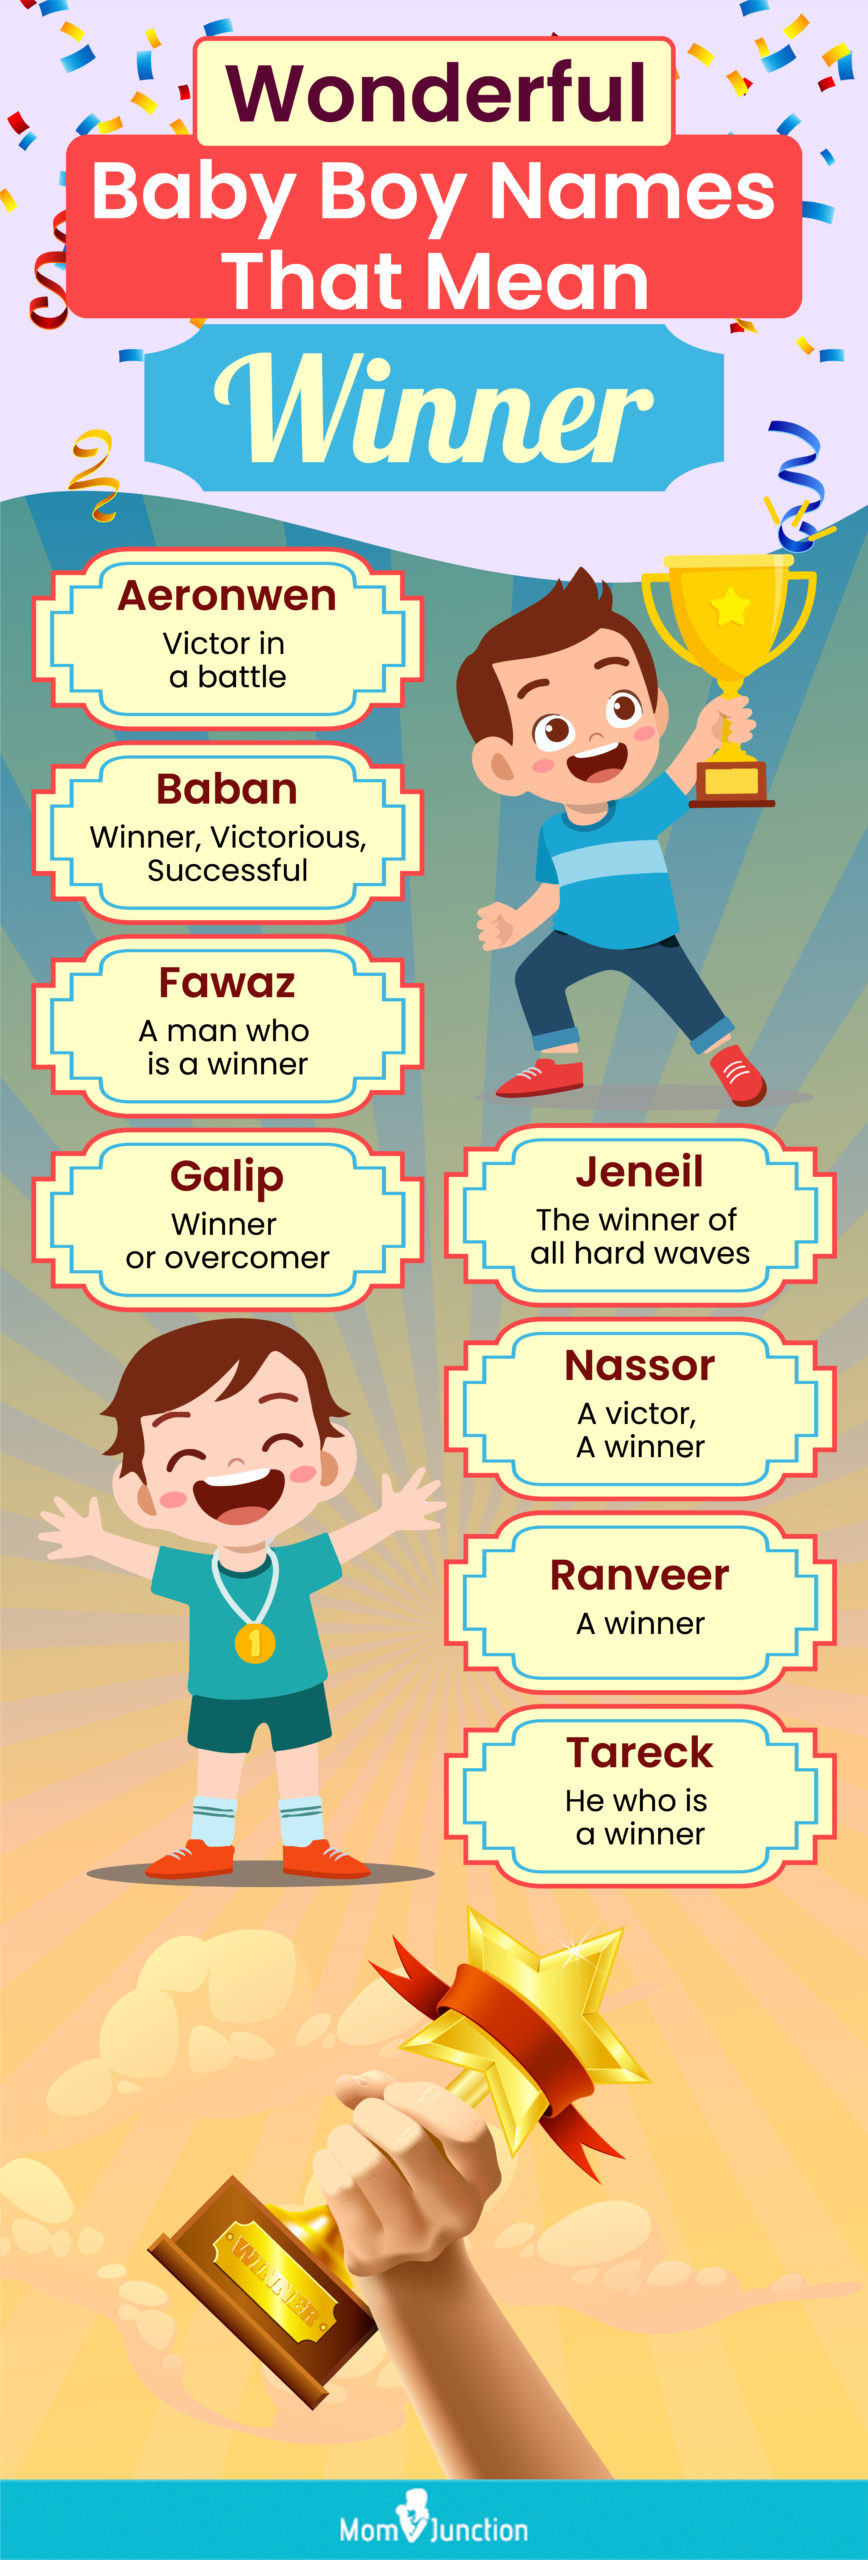 wonderful baby boy names that mean winner (infographic)